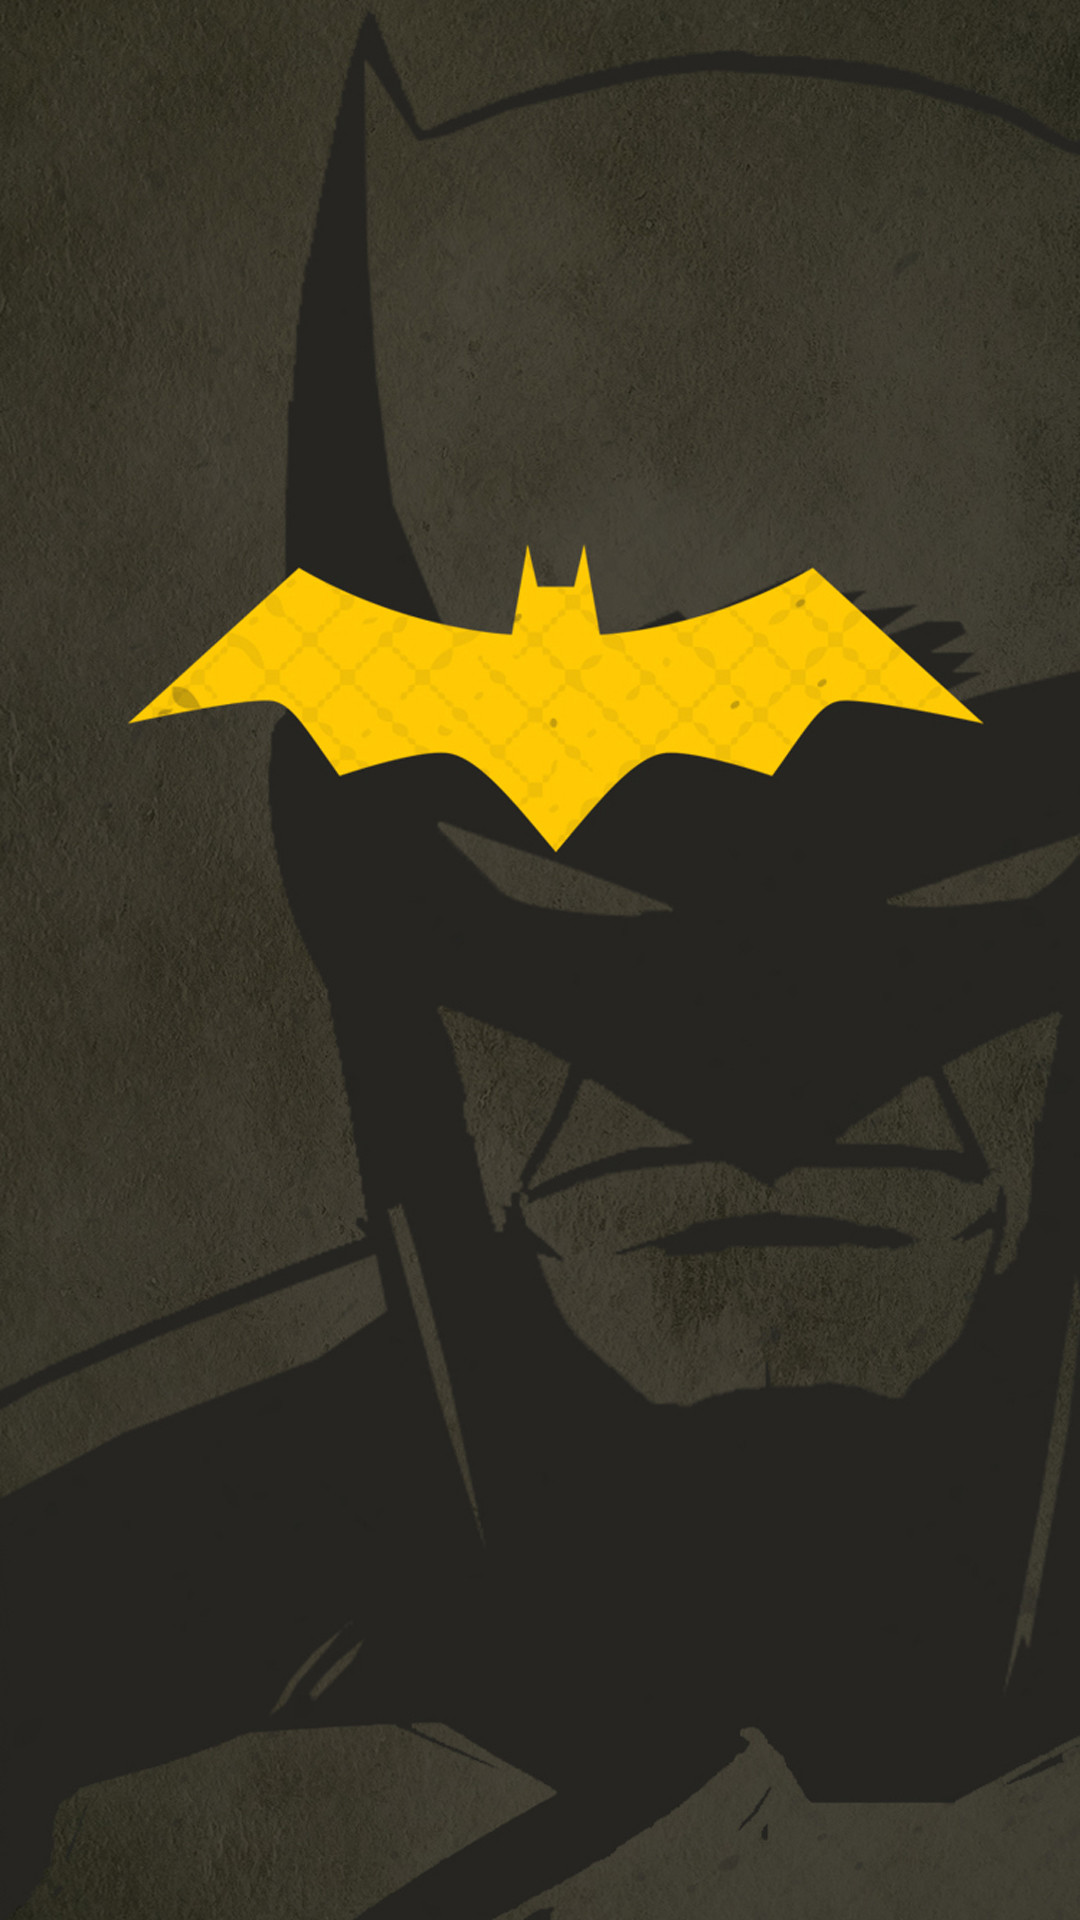 1080x1920 Batman 02 - iPhone 6 Plus - Visit to grab an amazing super hero shirt now